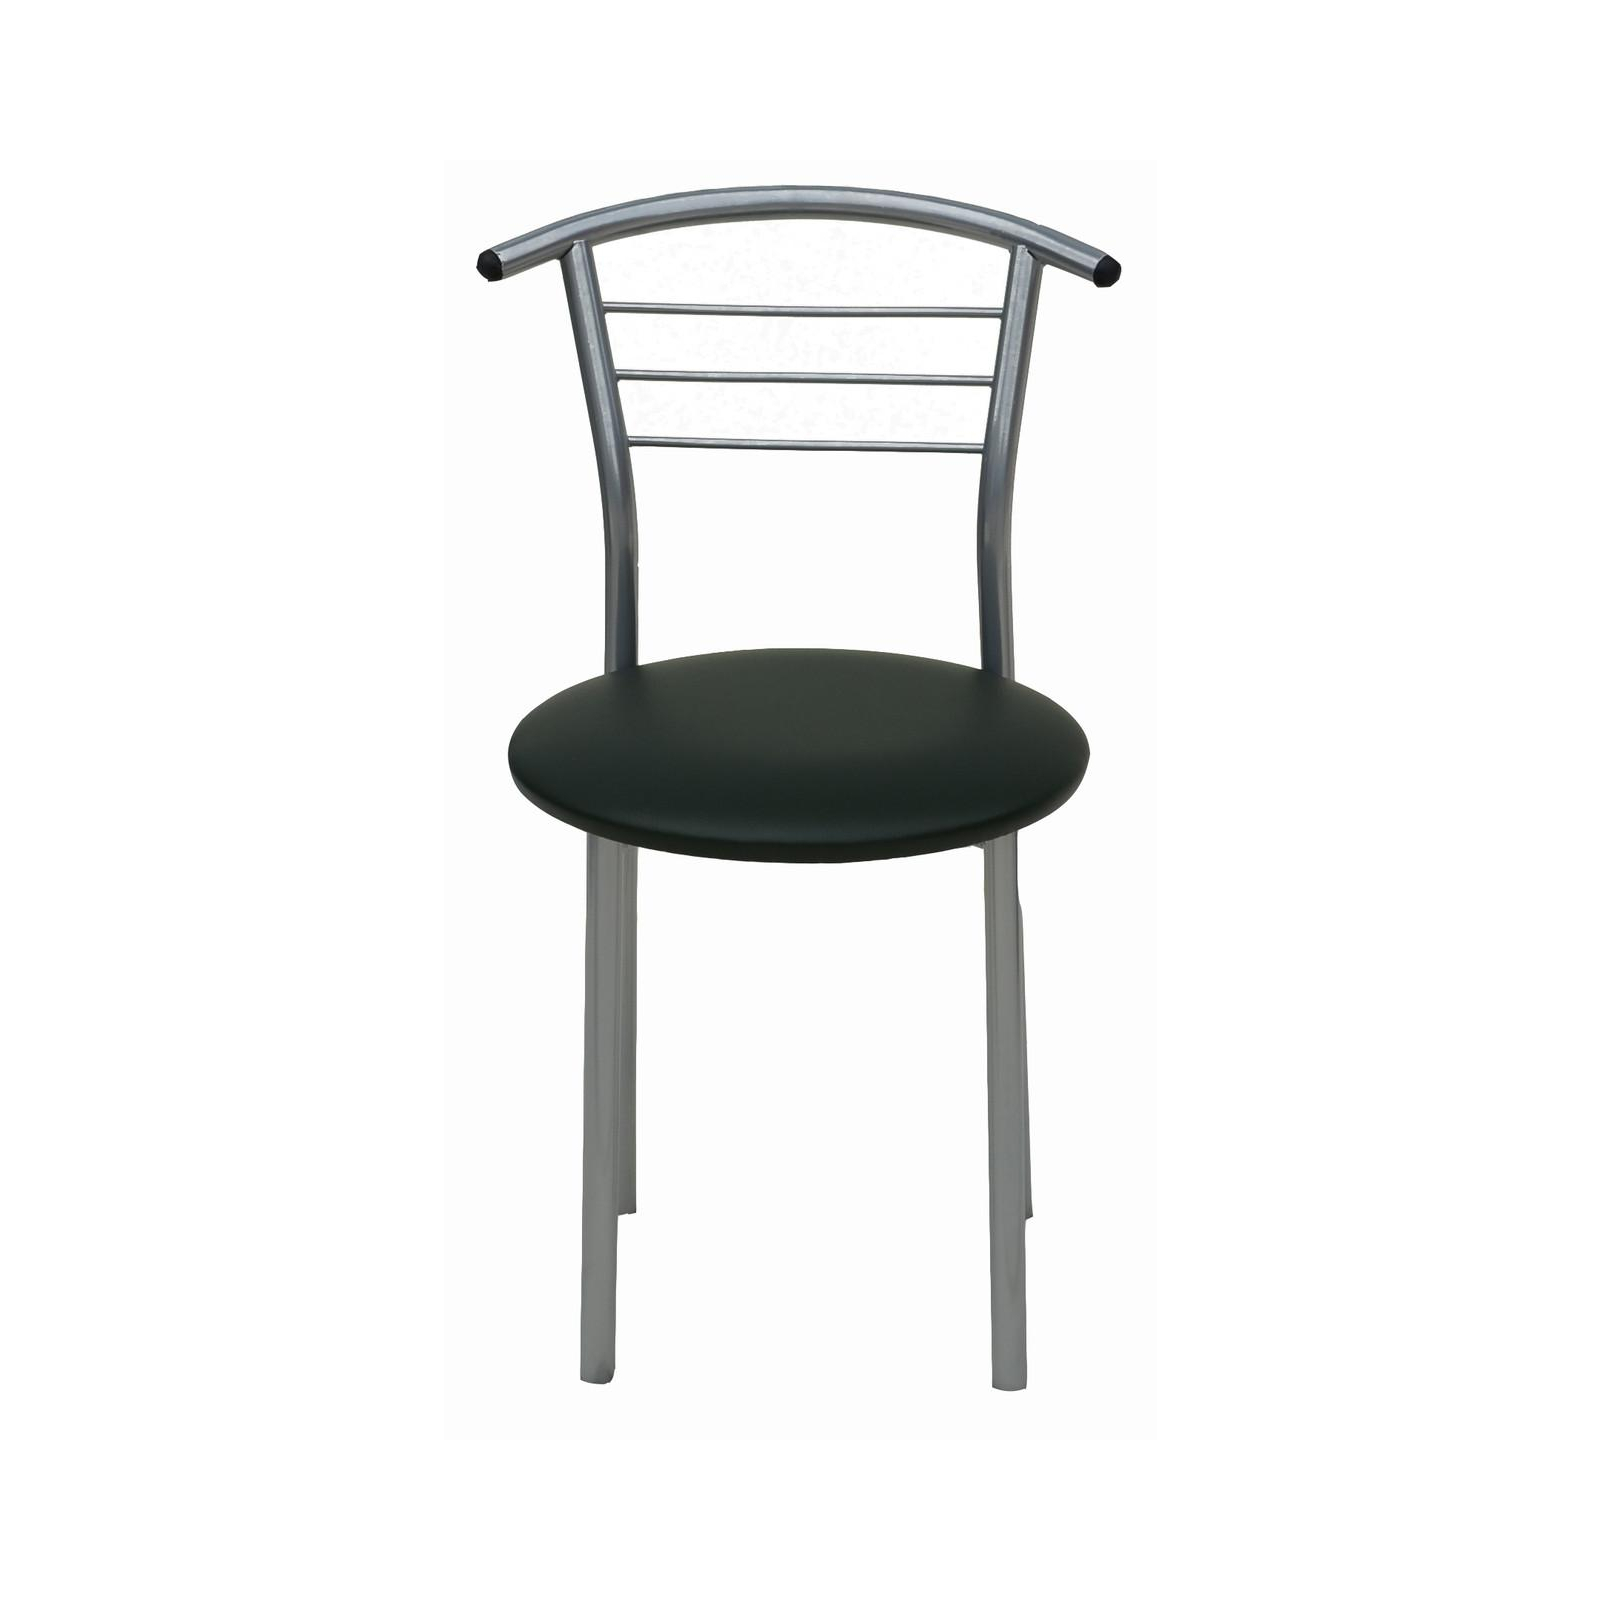 Барный стул Примтекс плюс 1011 alum S-6214 Зеленый (1011 alum S-6214)